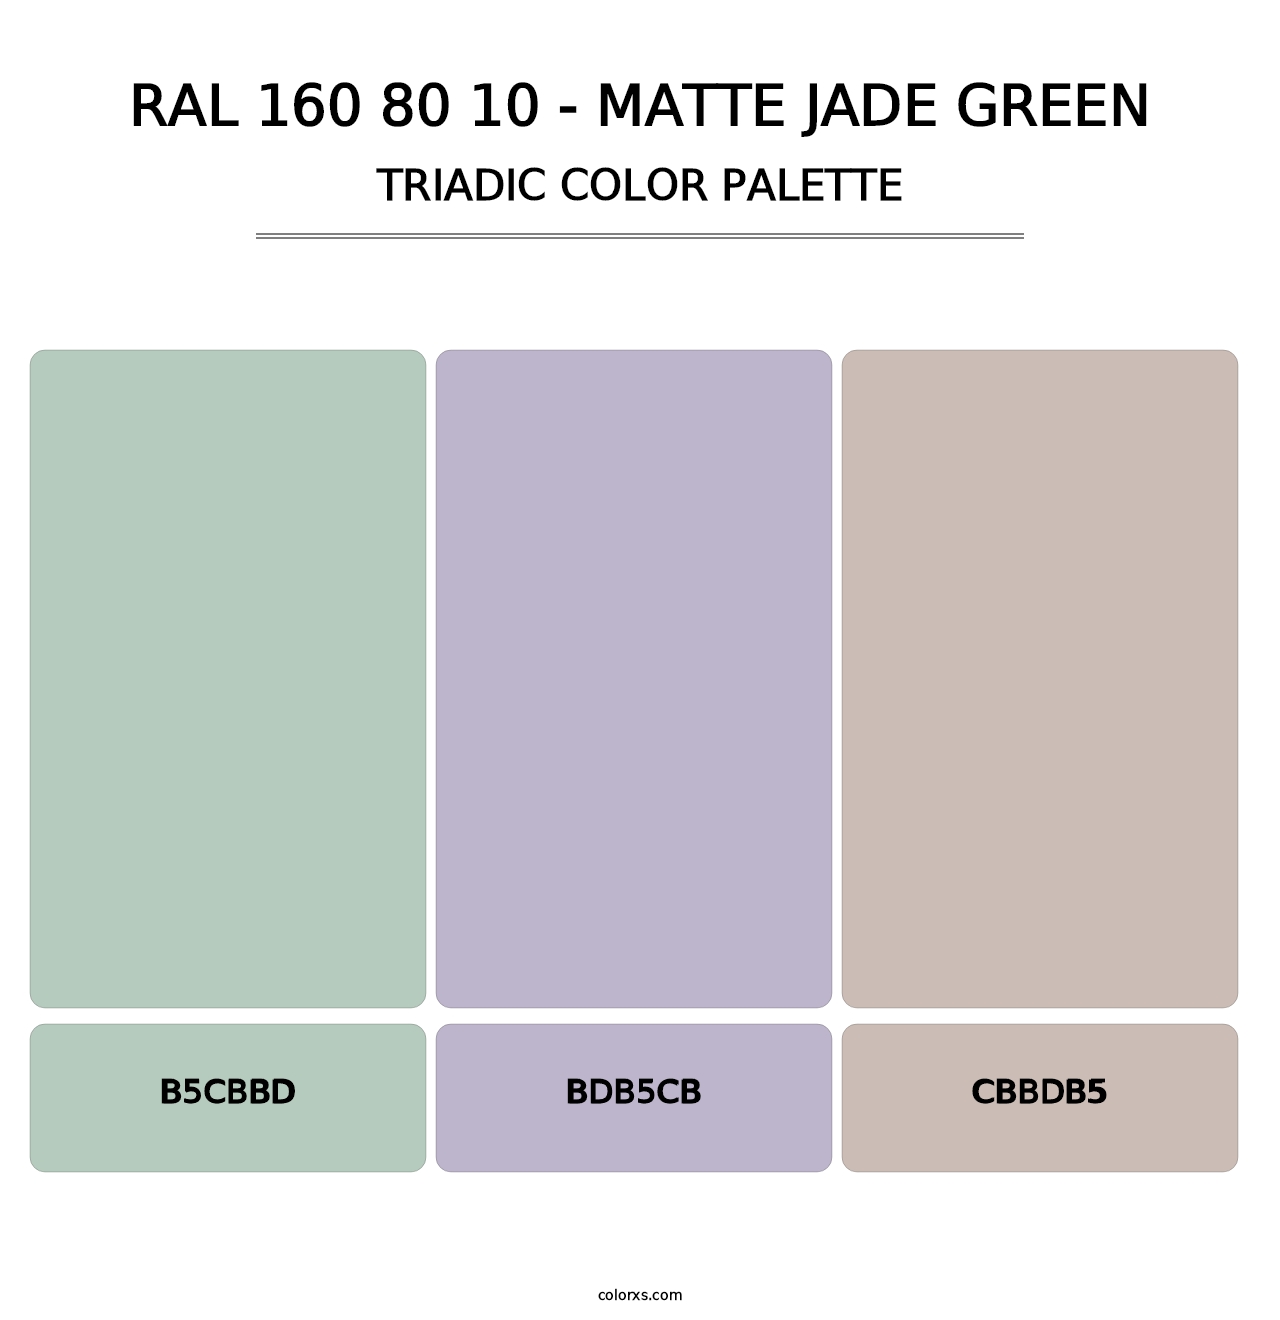 RAL 160 80 10 - Matte Jade Green - Triadic Color Palette